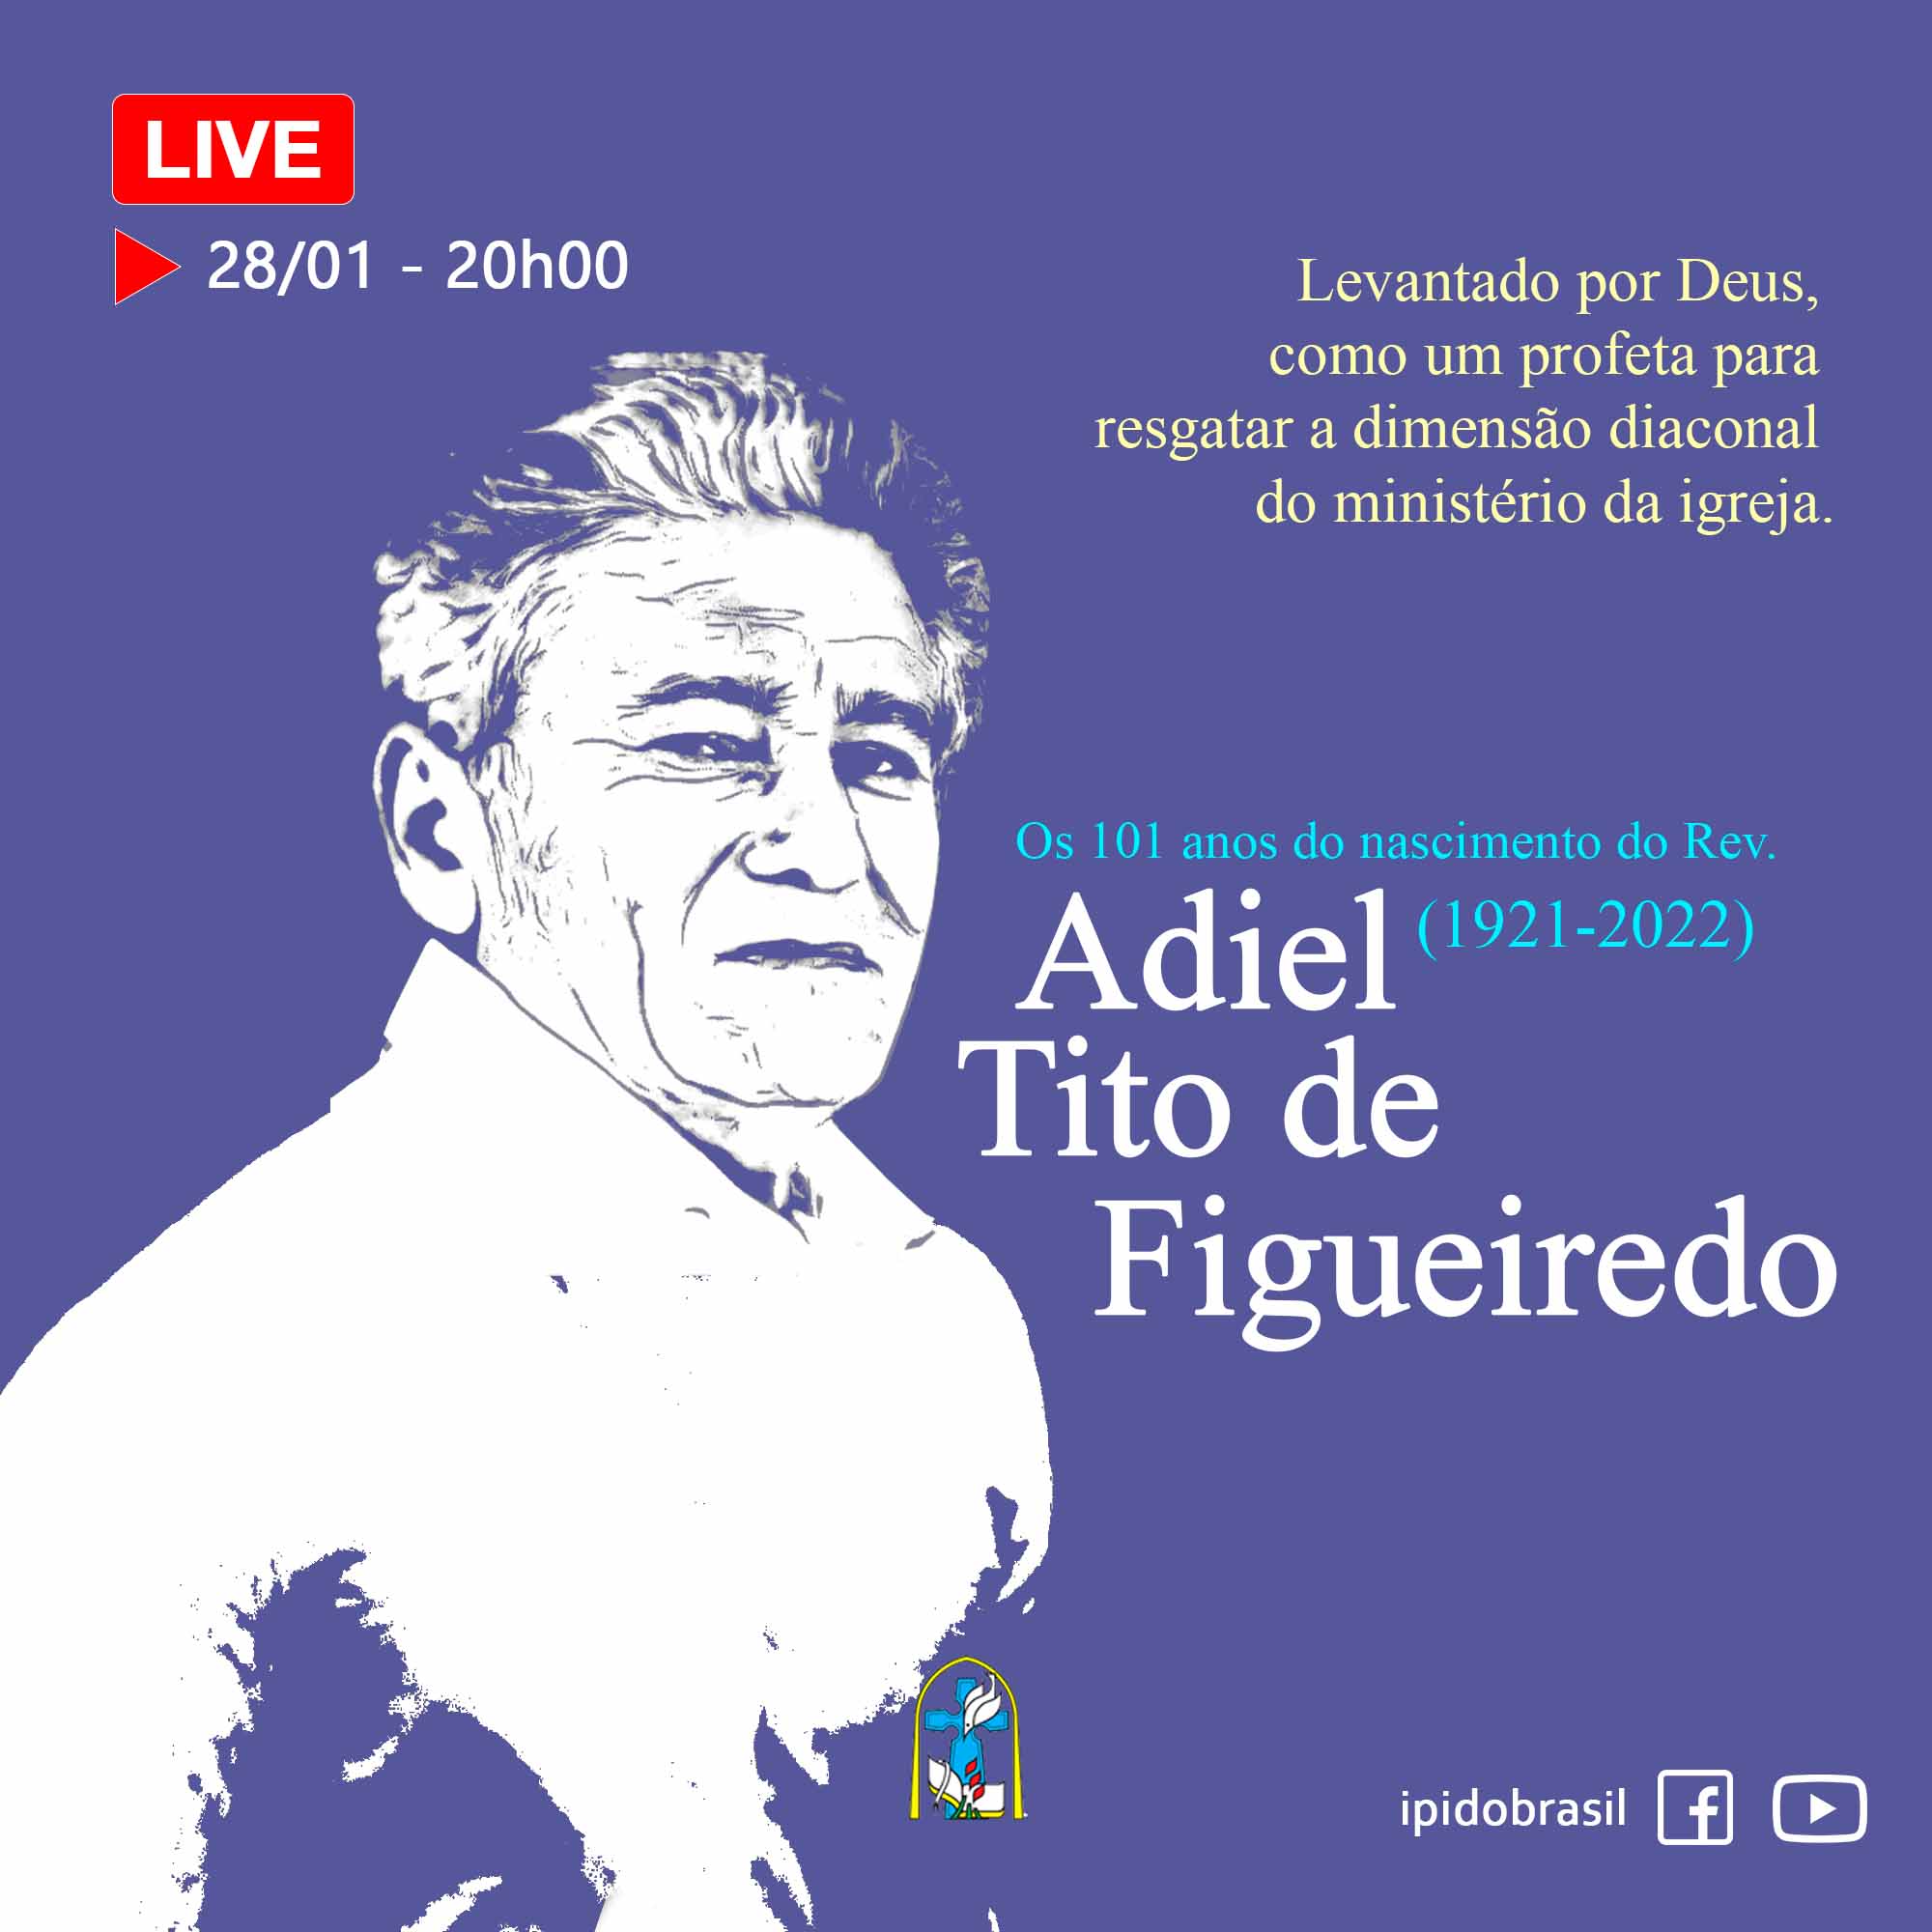 Live sobre o Rev. Adiel Tito de Figueiredo